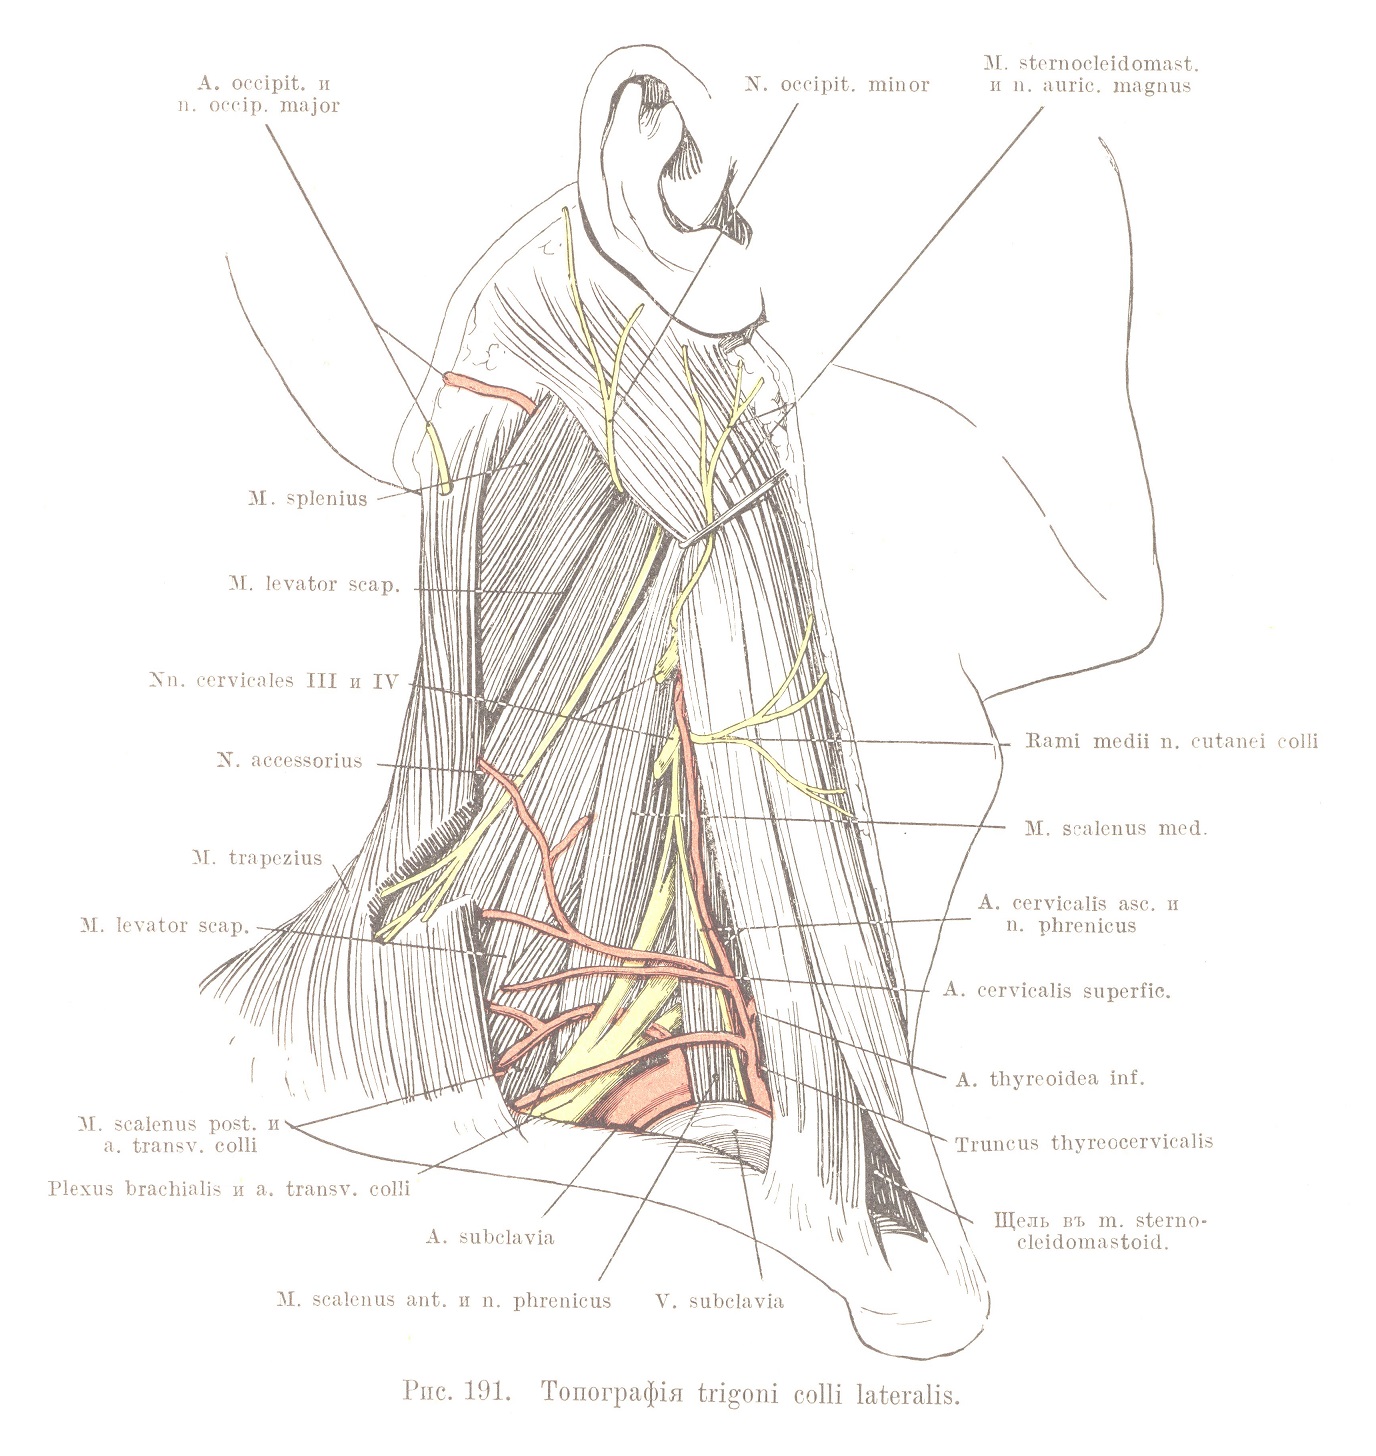 Trigoni colli lateralis